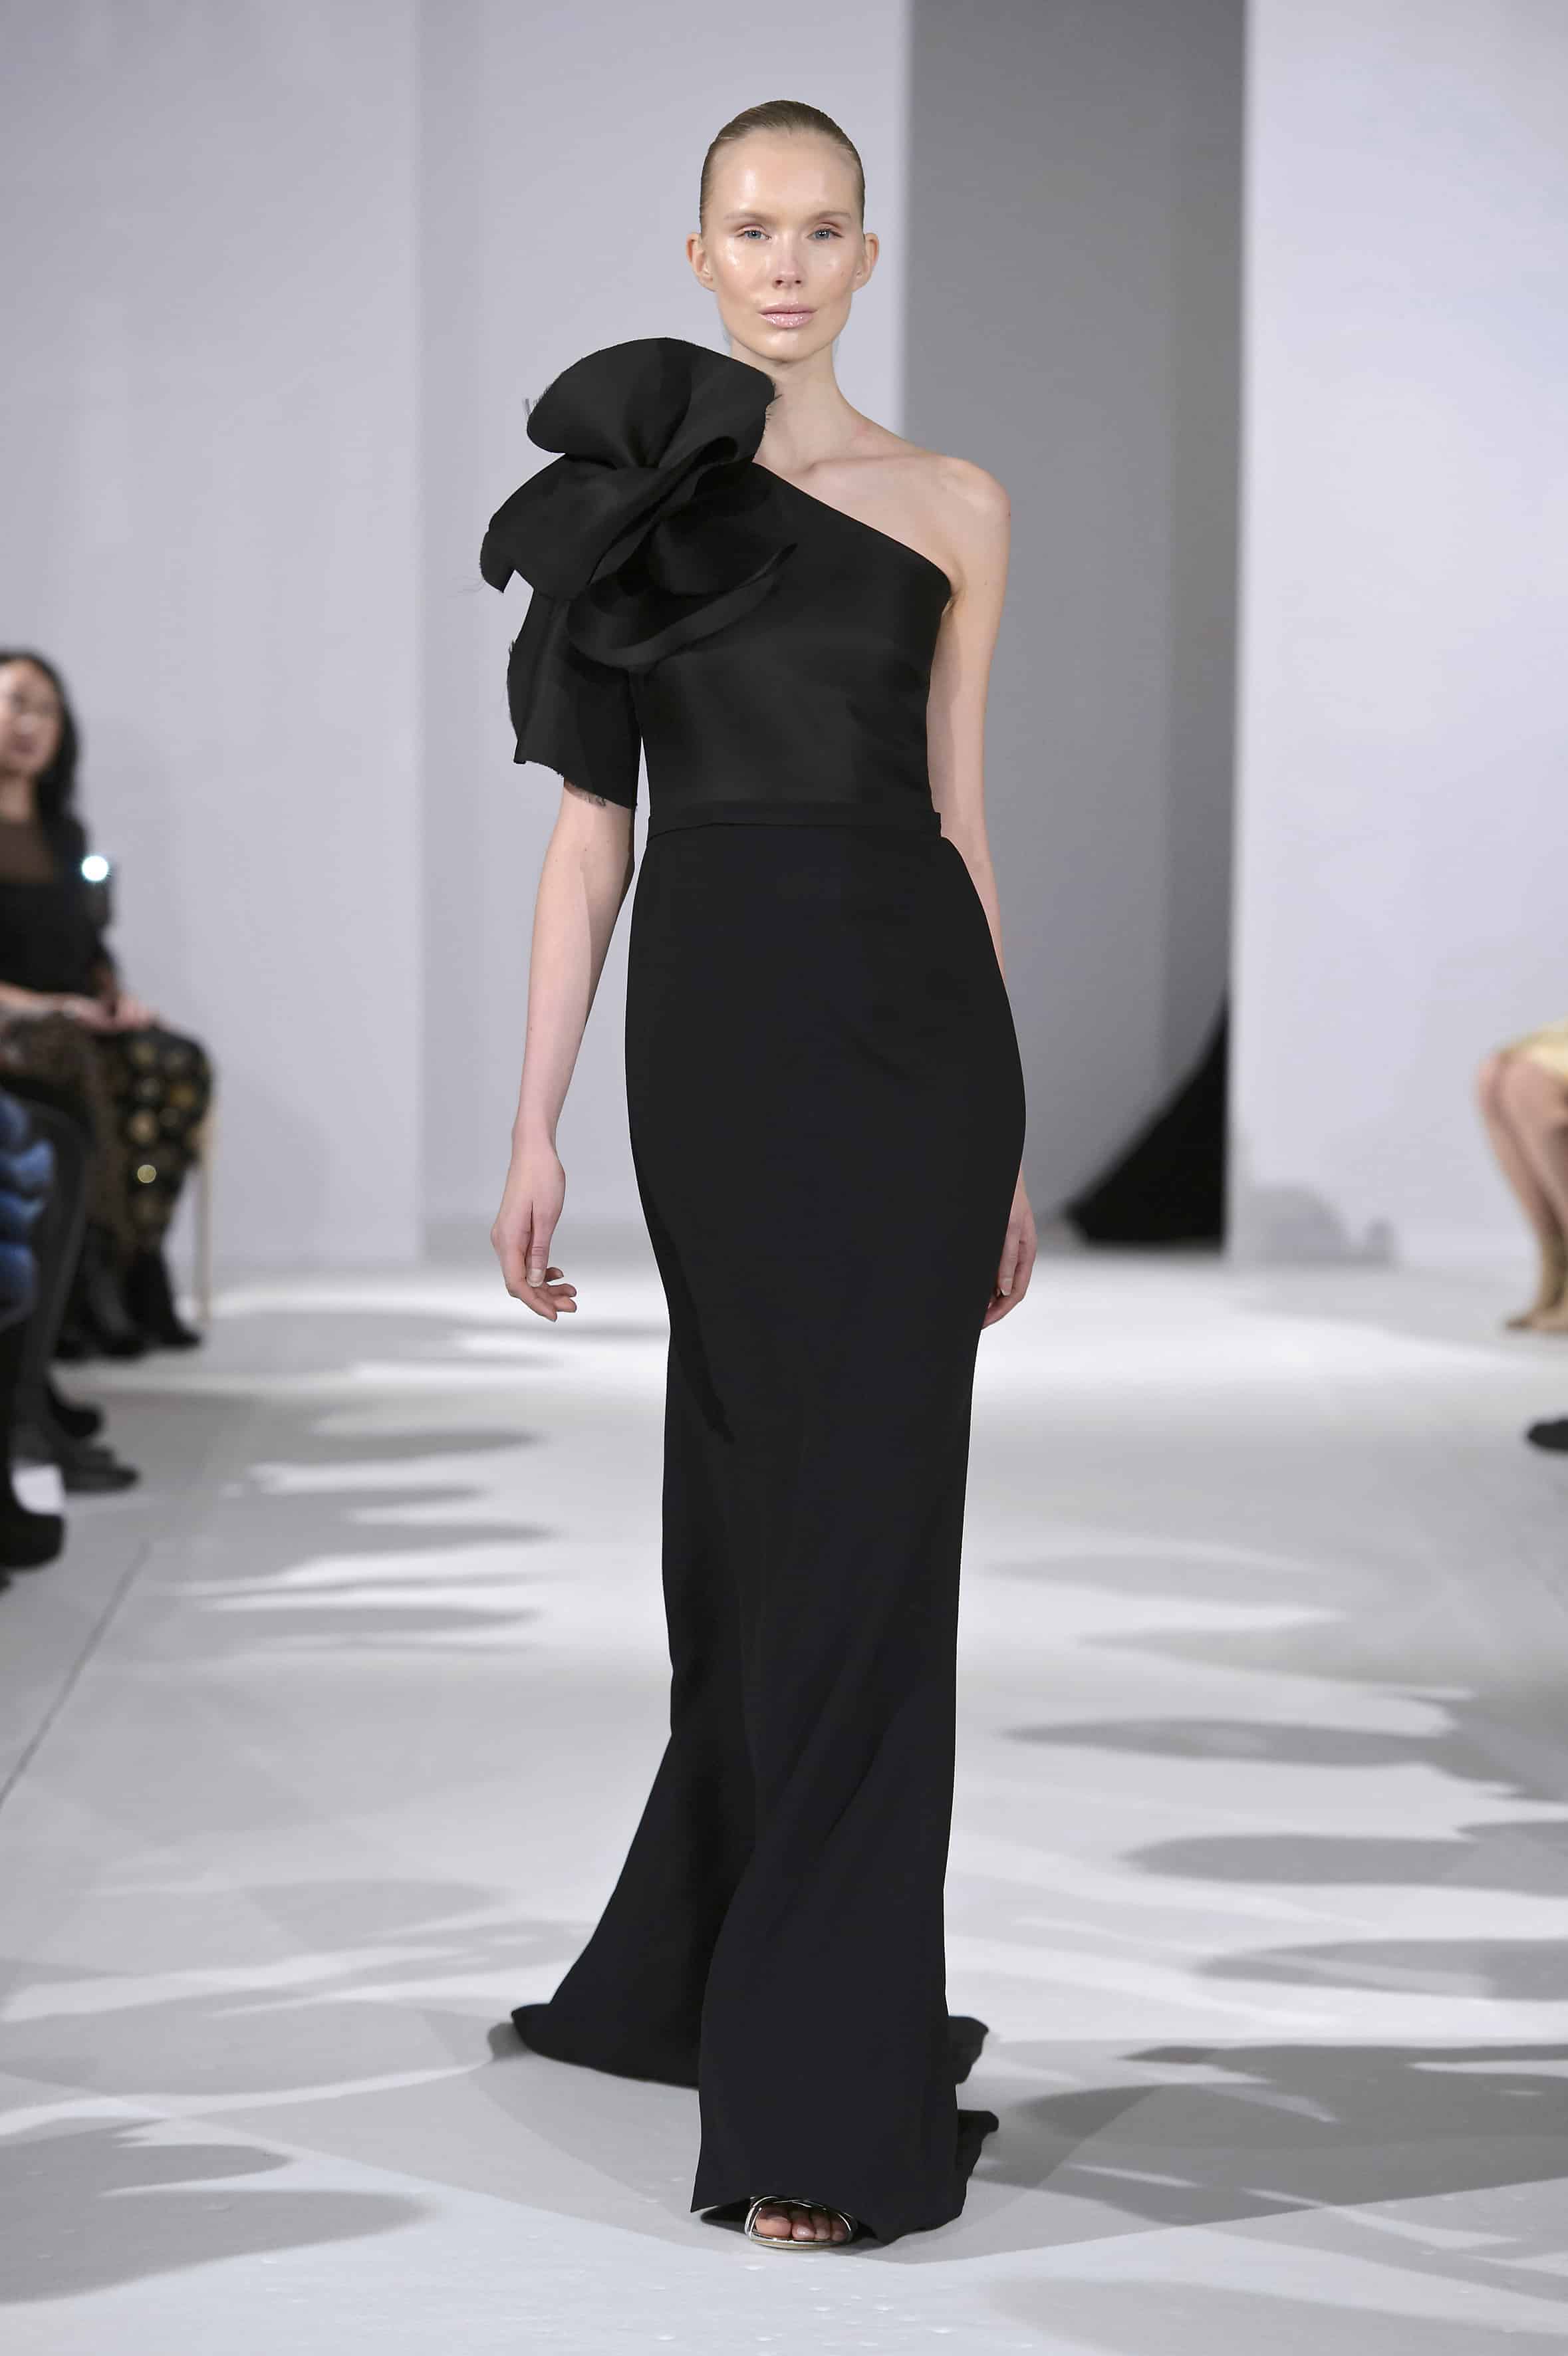 Greek Fashion Designer Celia Kritharioti Hits Home Run With Show In Paris